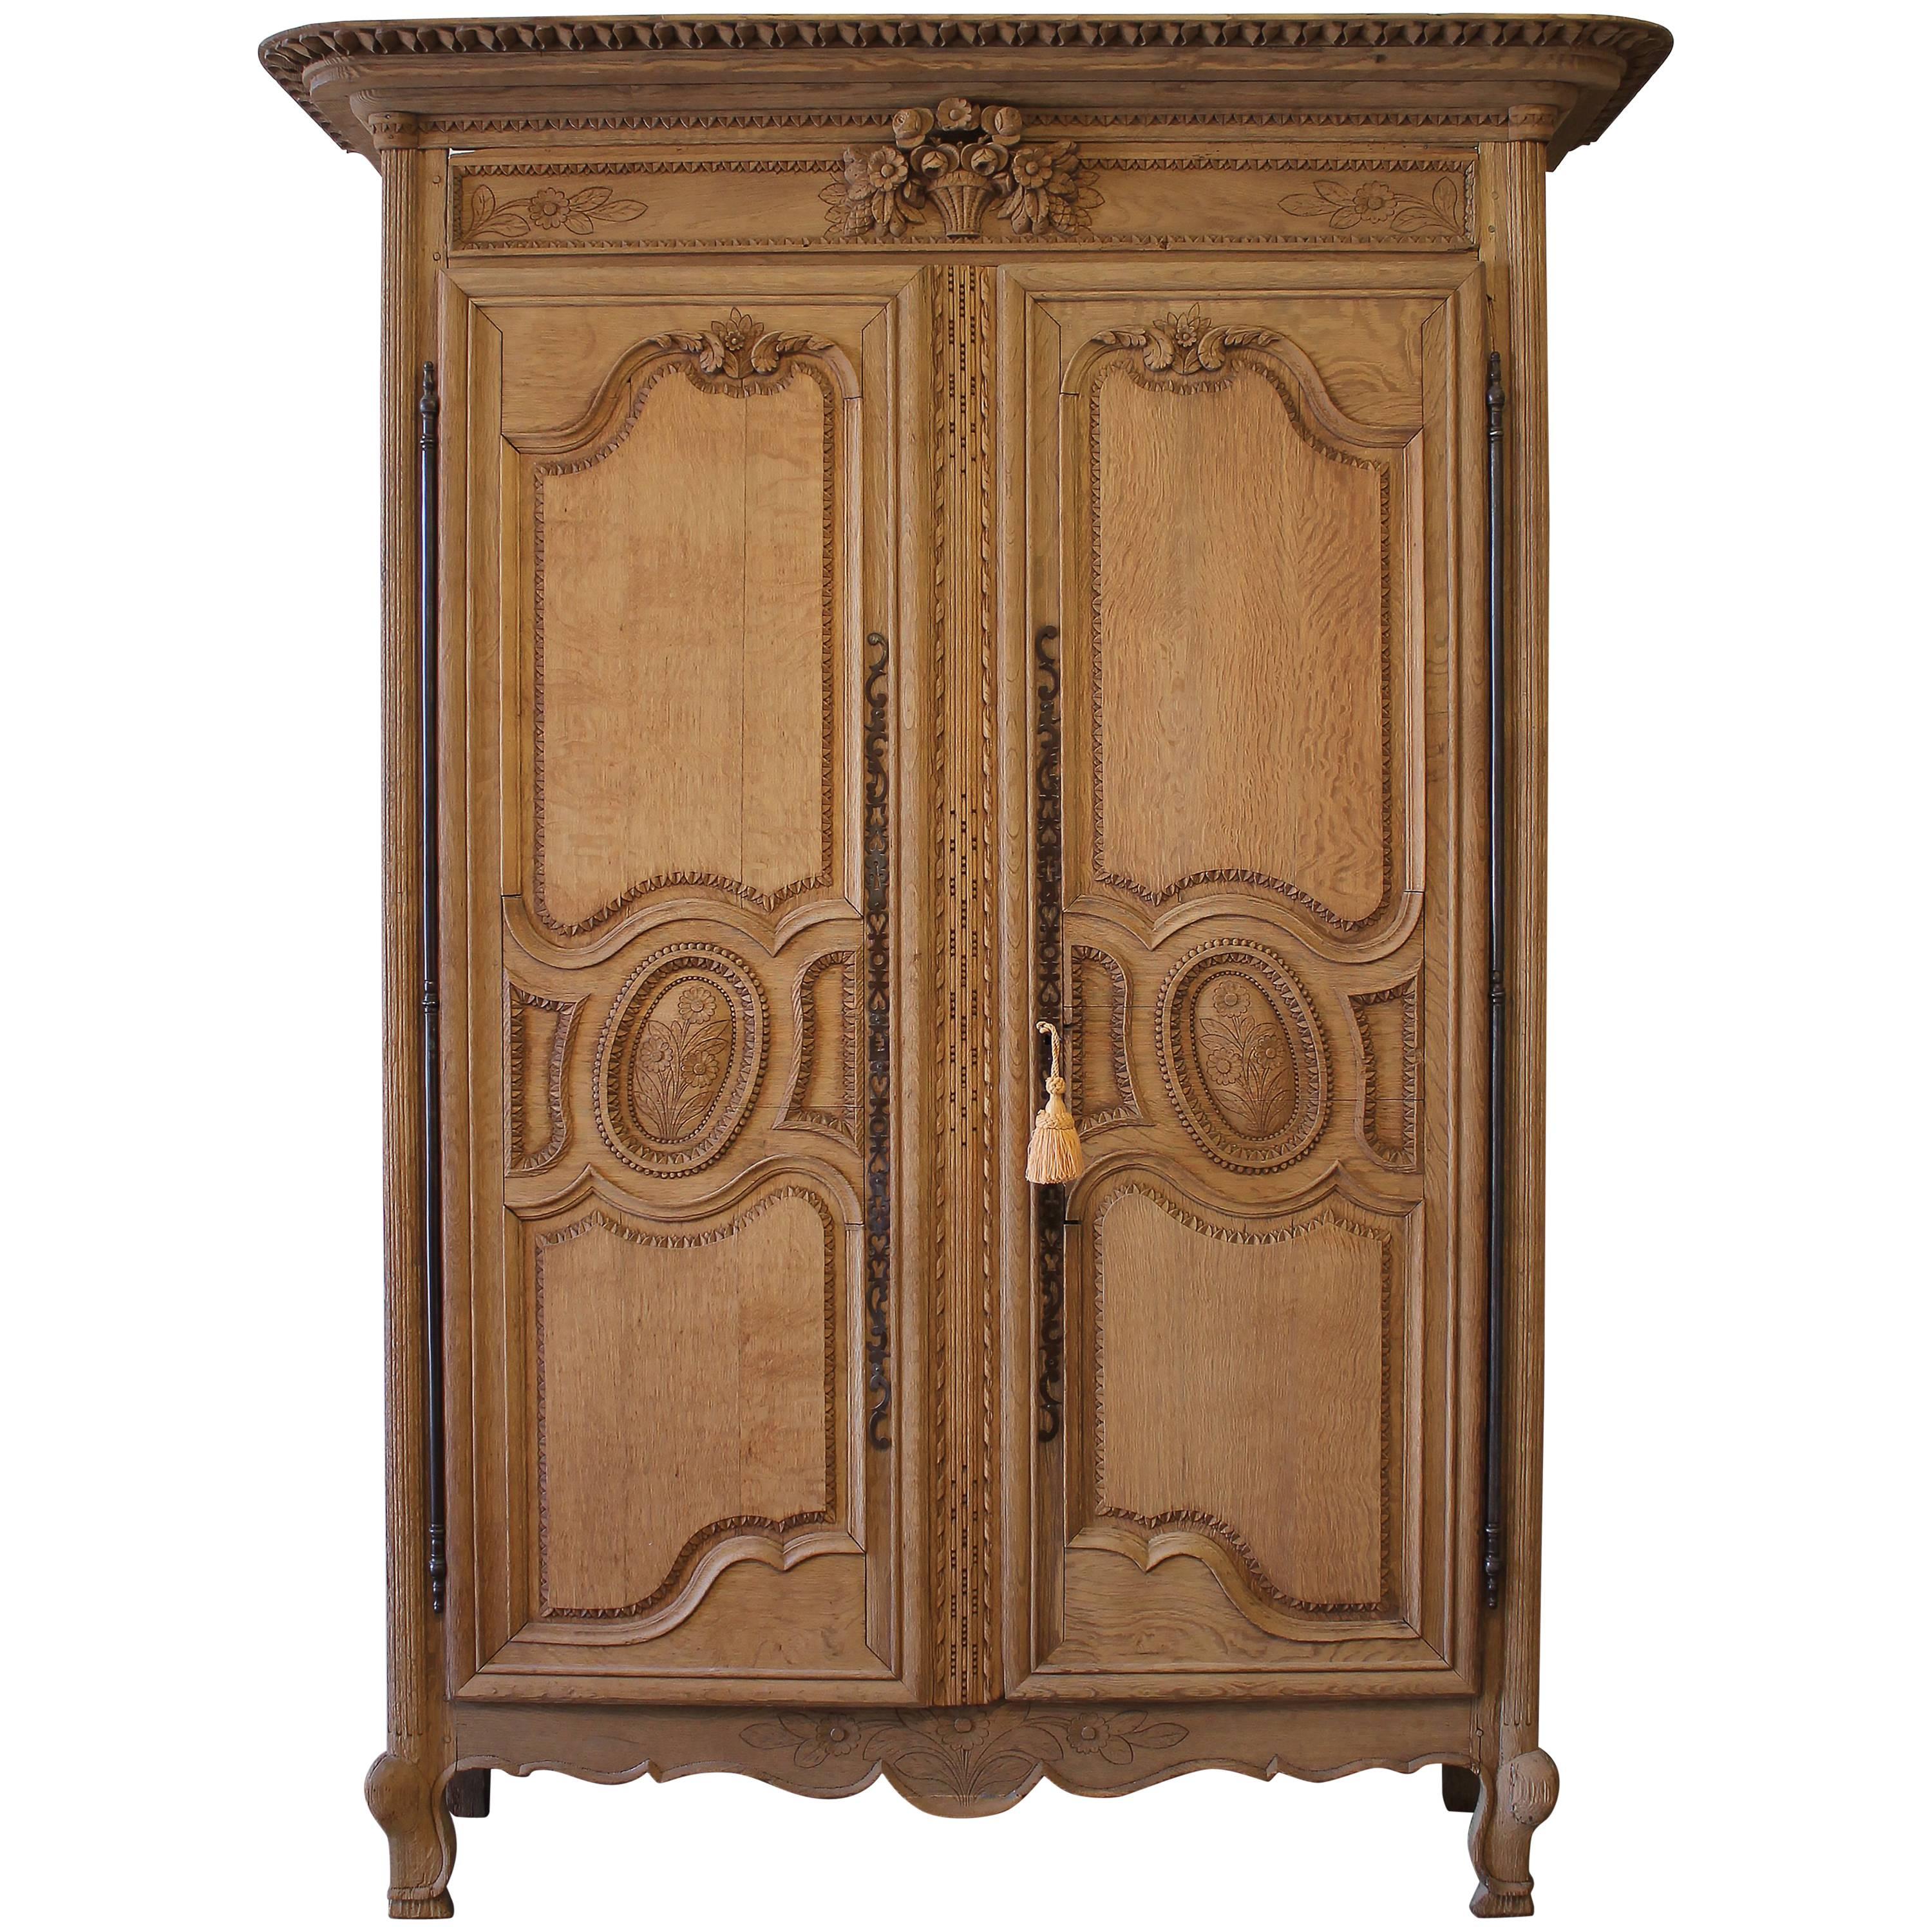 Early 19th Century Raw European Quarter Sawn White Oak Armoire Cabinet